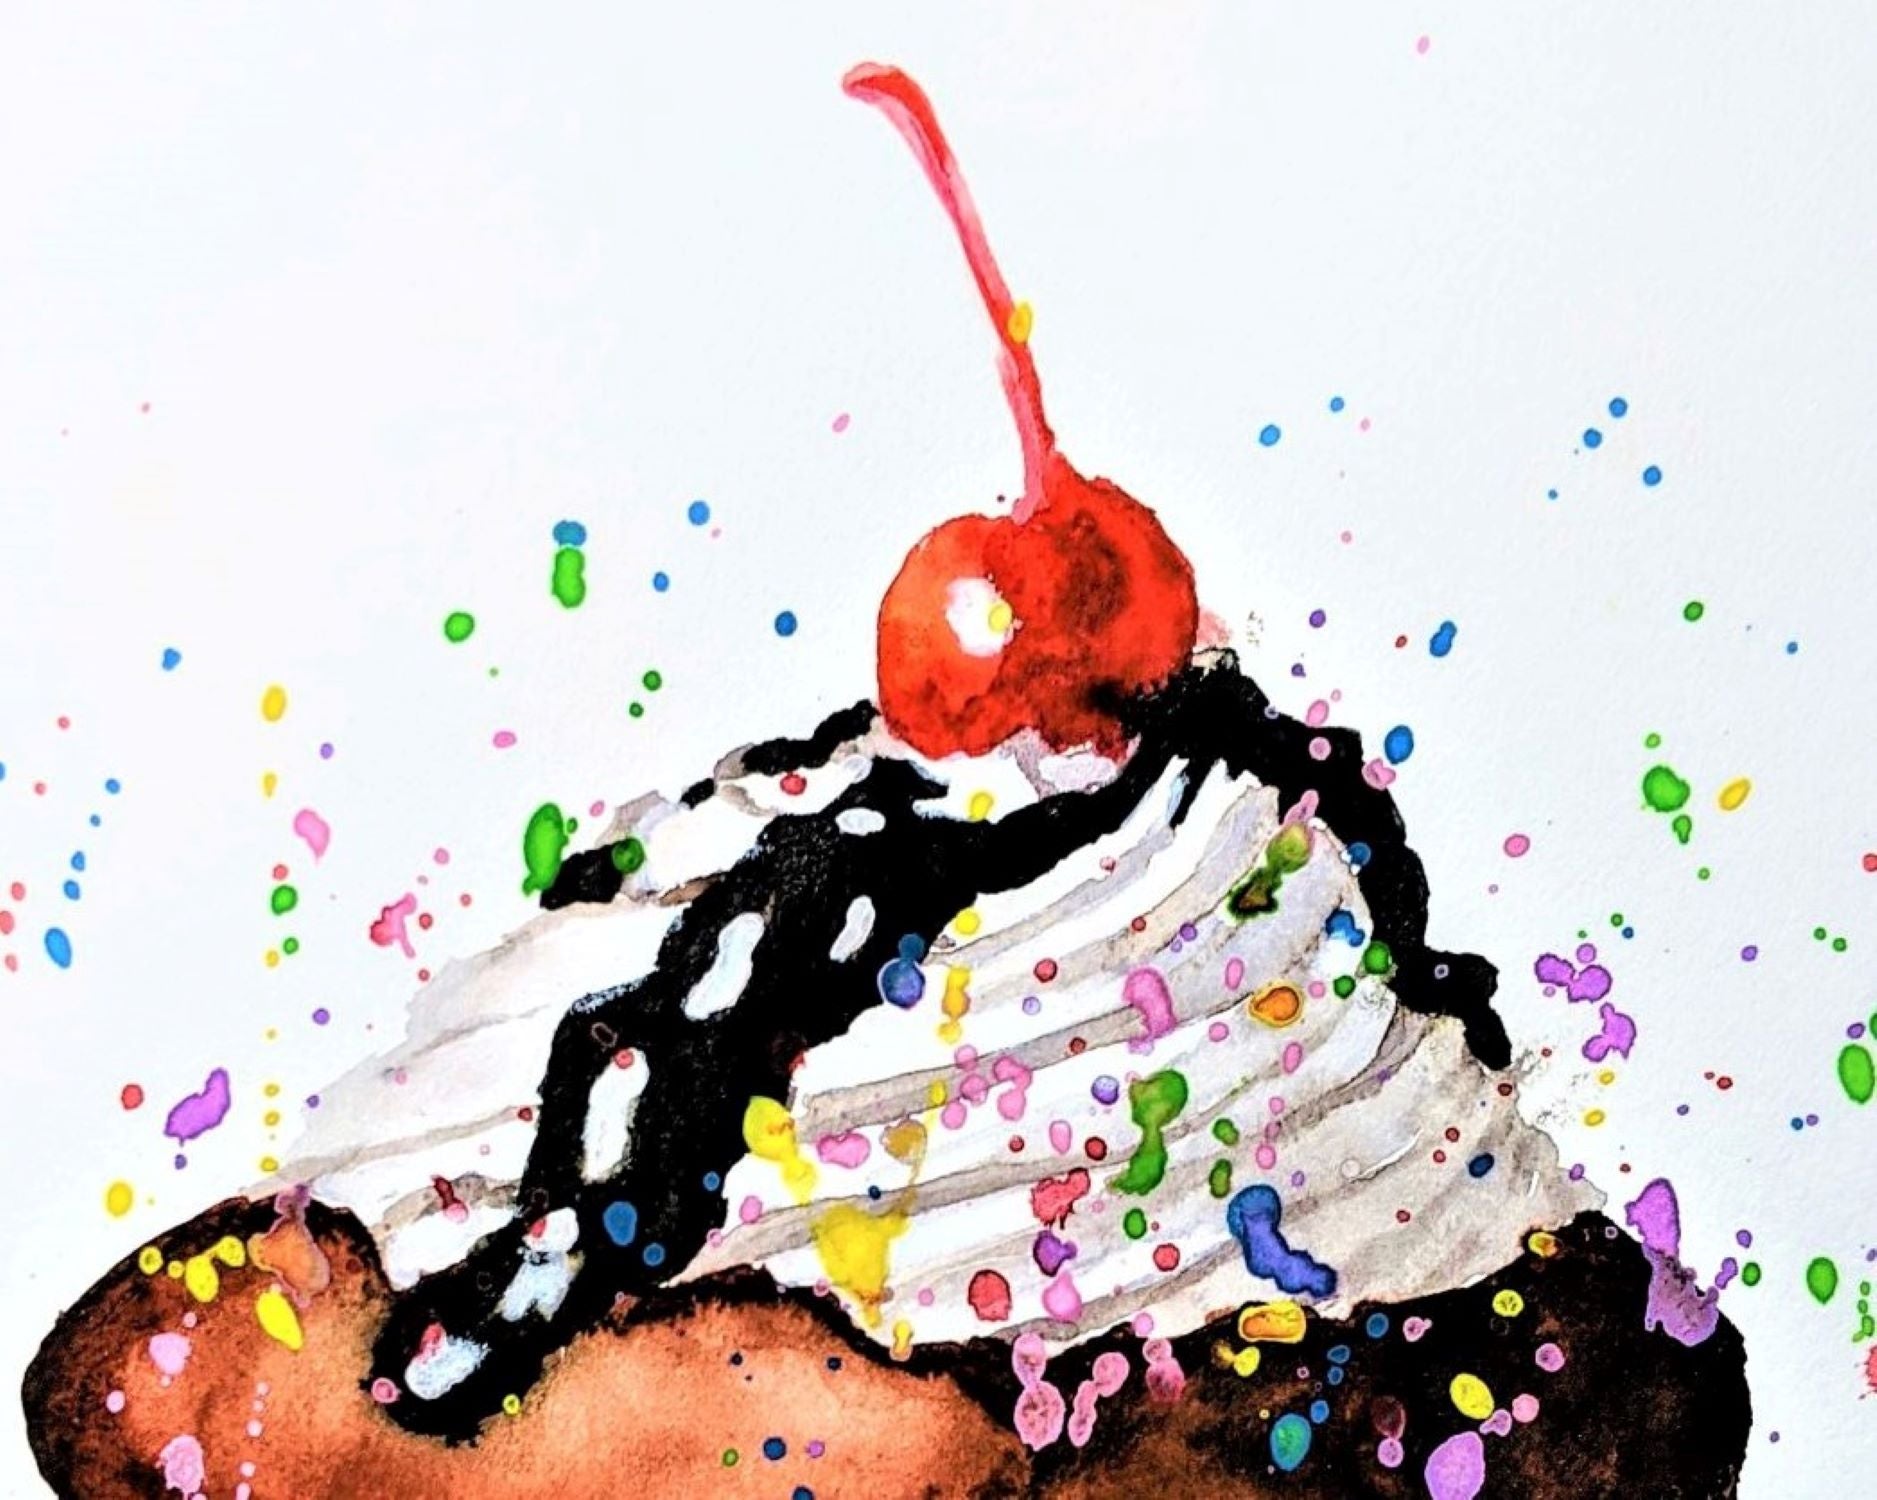 Cupcake with sprinkles painting detail